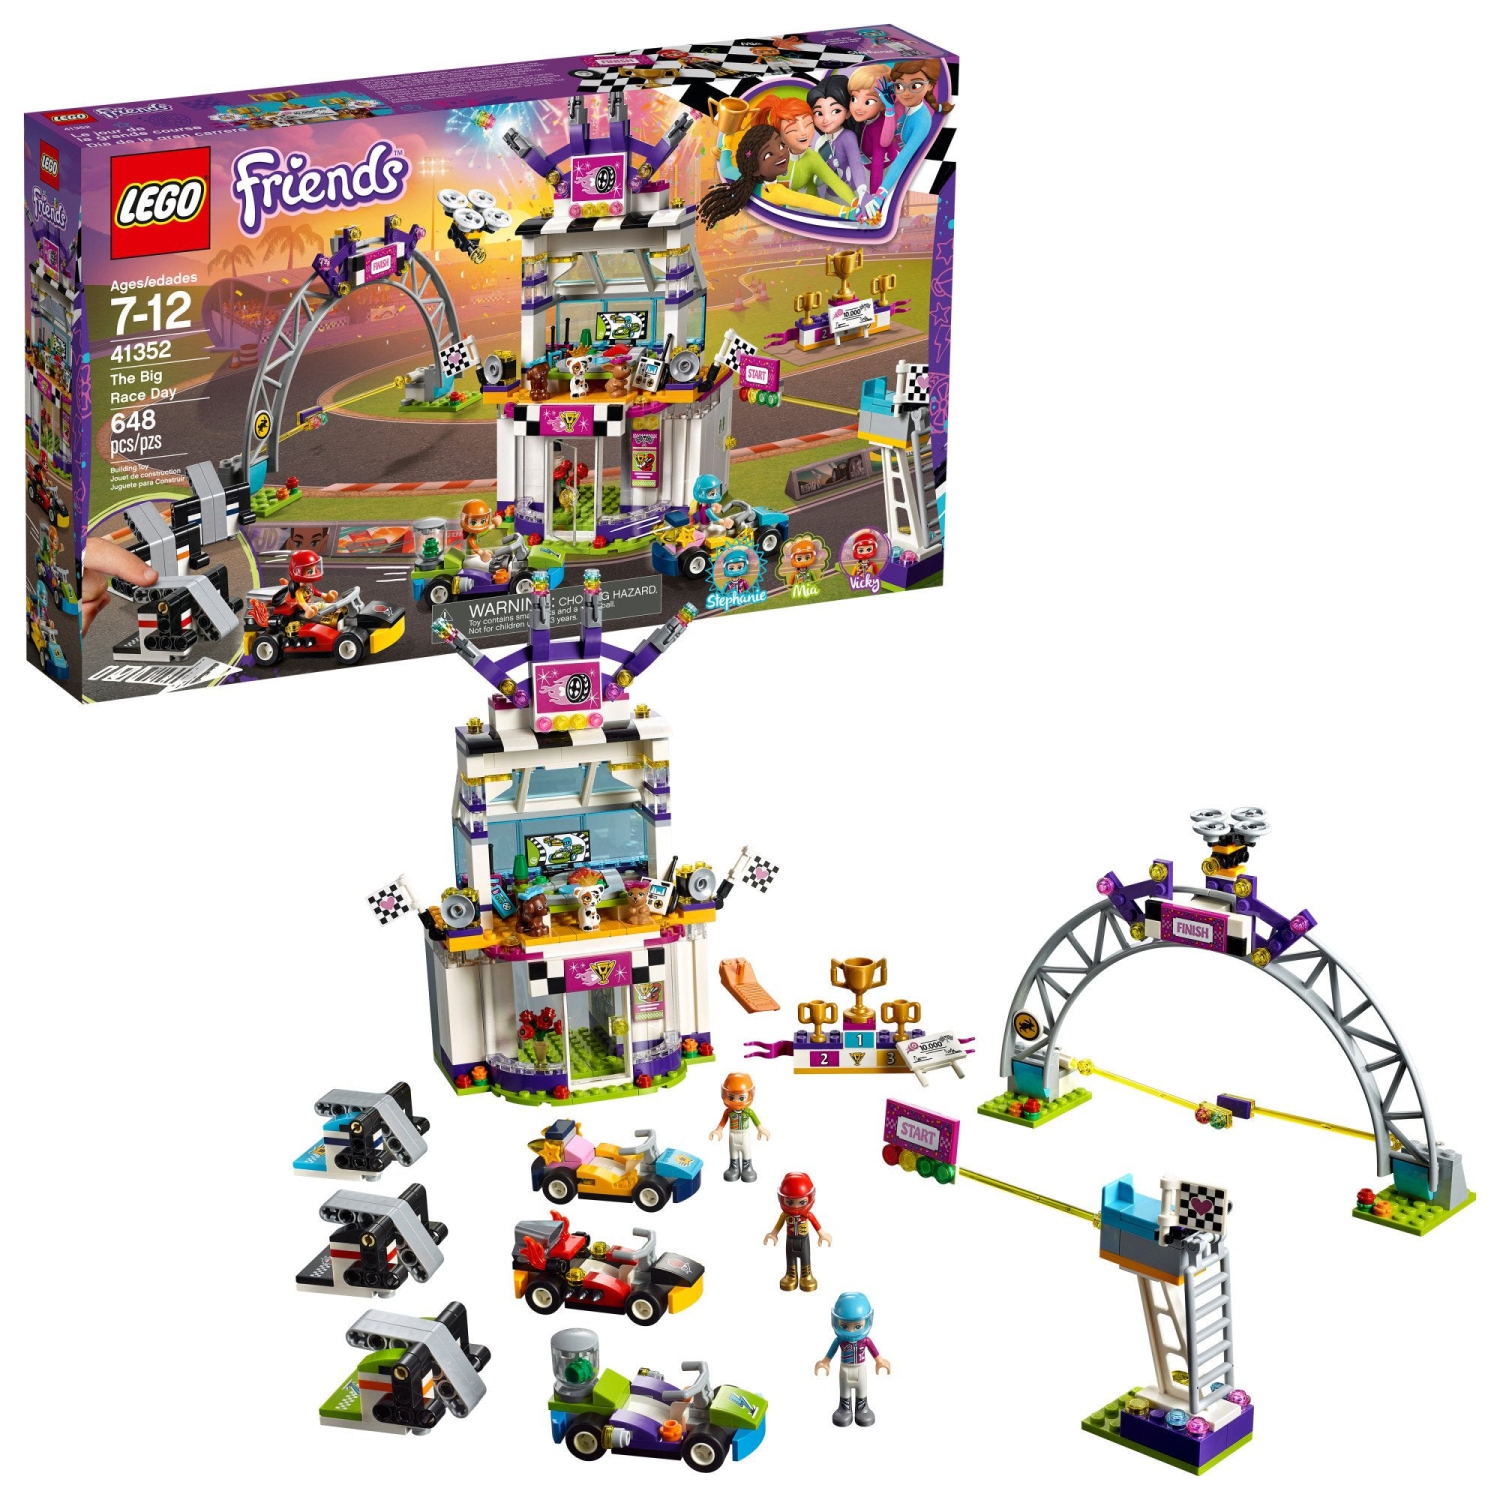 LEGO Friends The Big Race Day 41352 Building Kit (648 Piece)